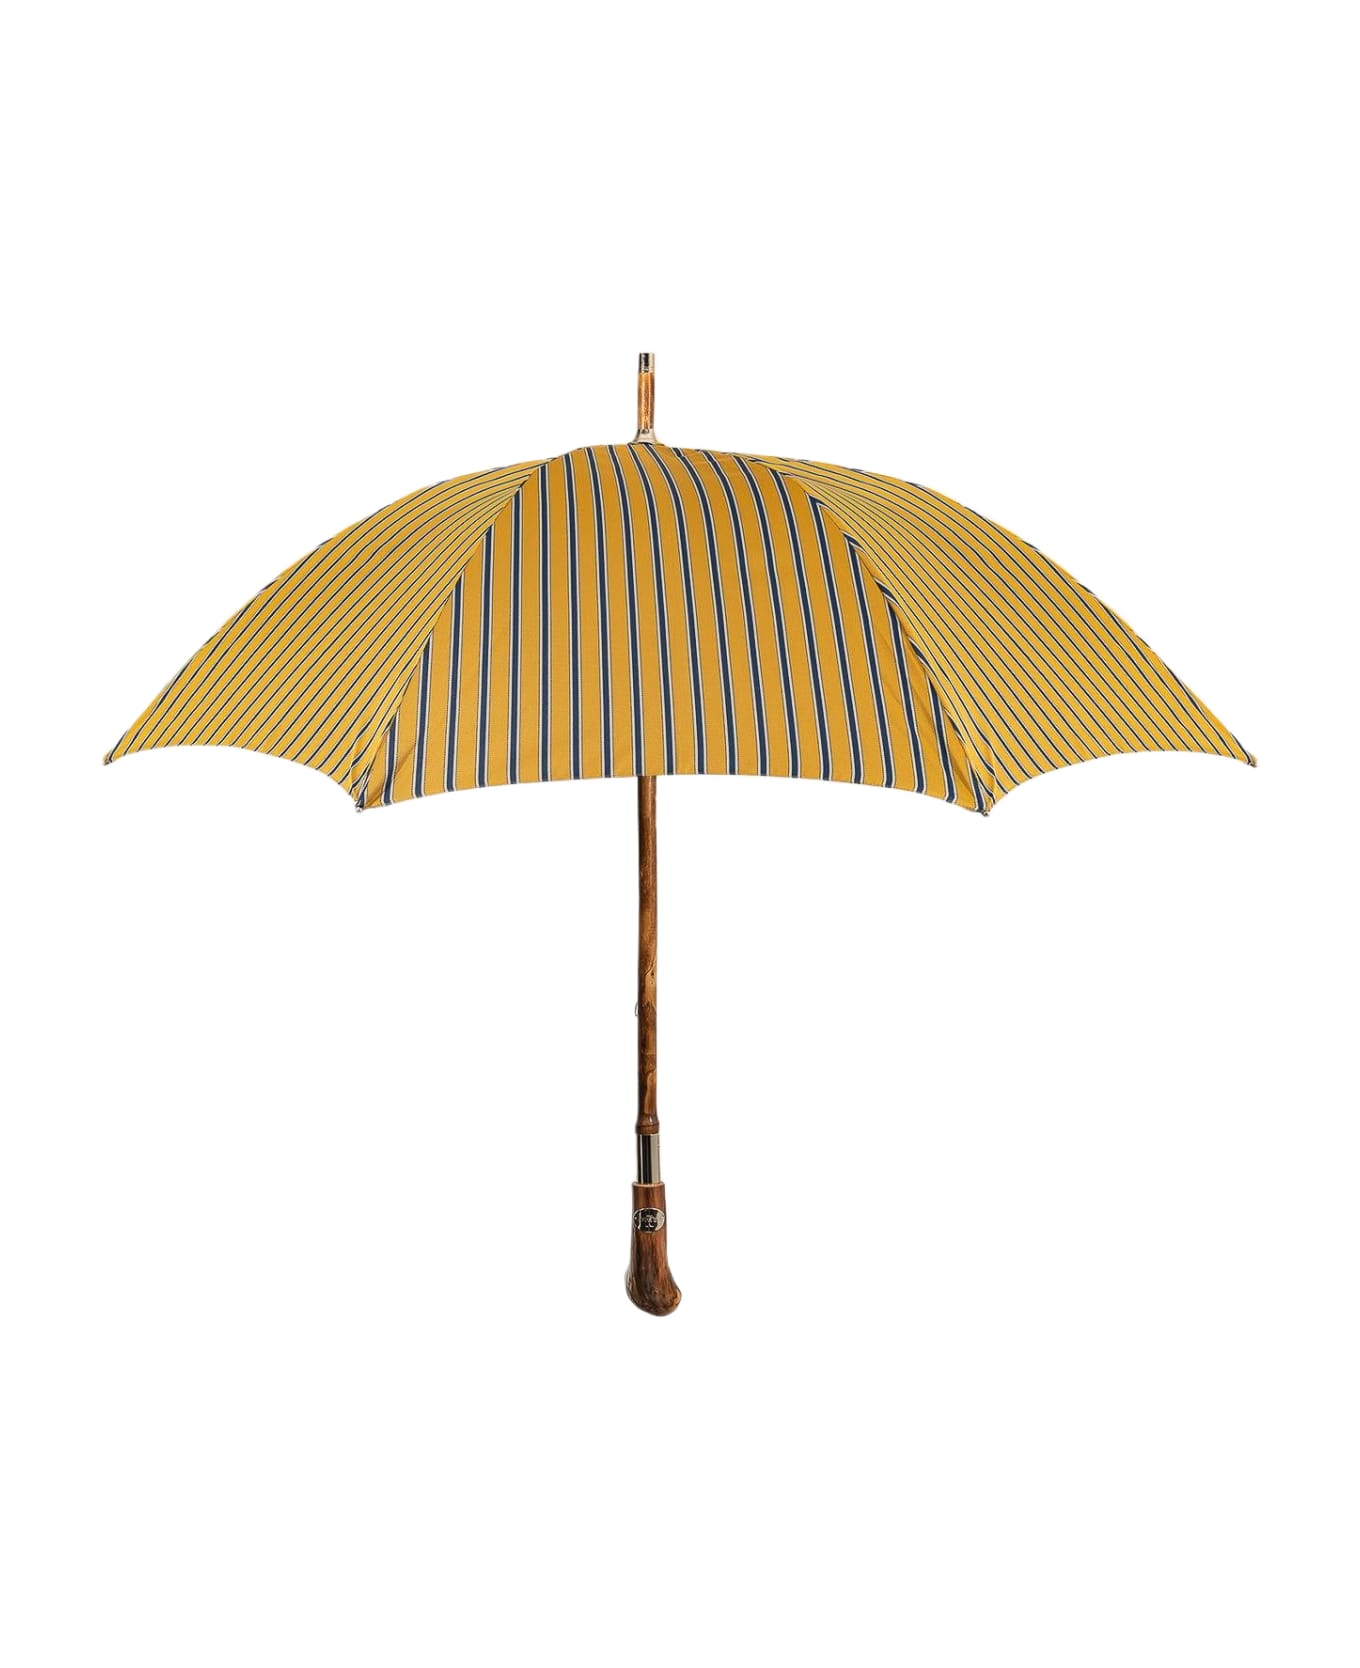 Larusmiani Umbrella 'pic Nic' Umbrella - Yellow